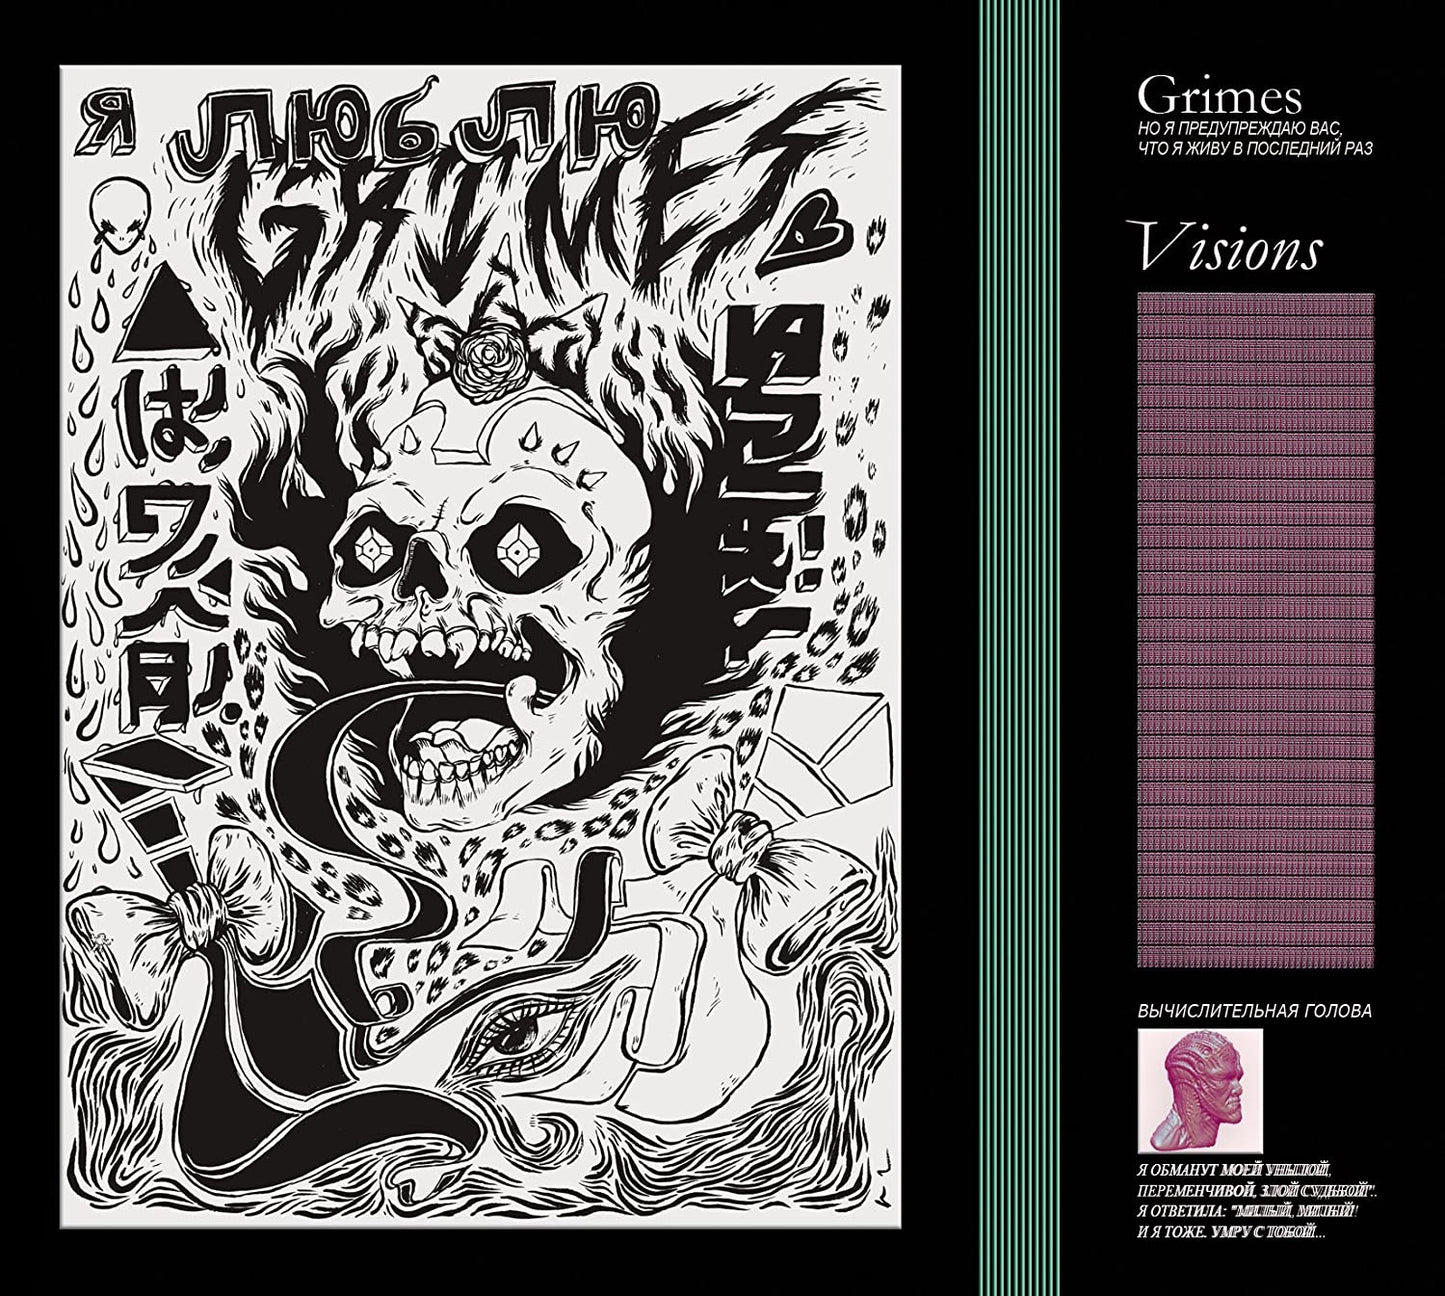 CD - Grimes - Visions